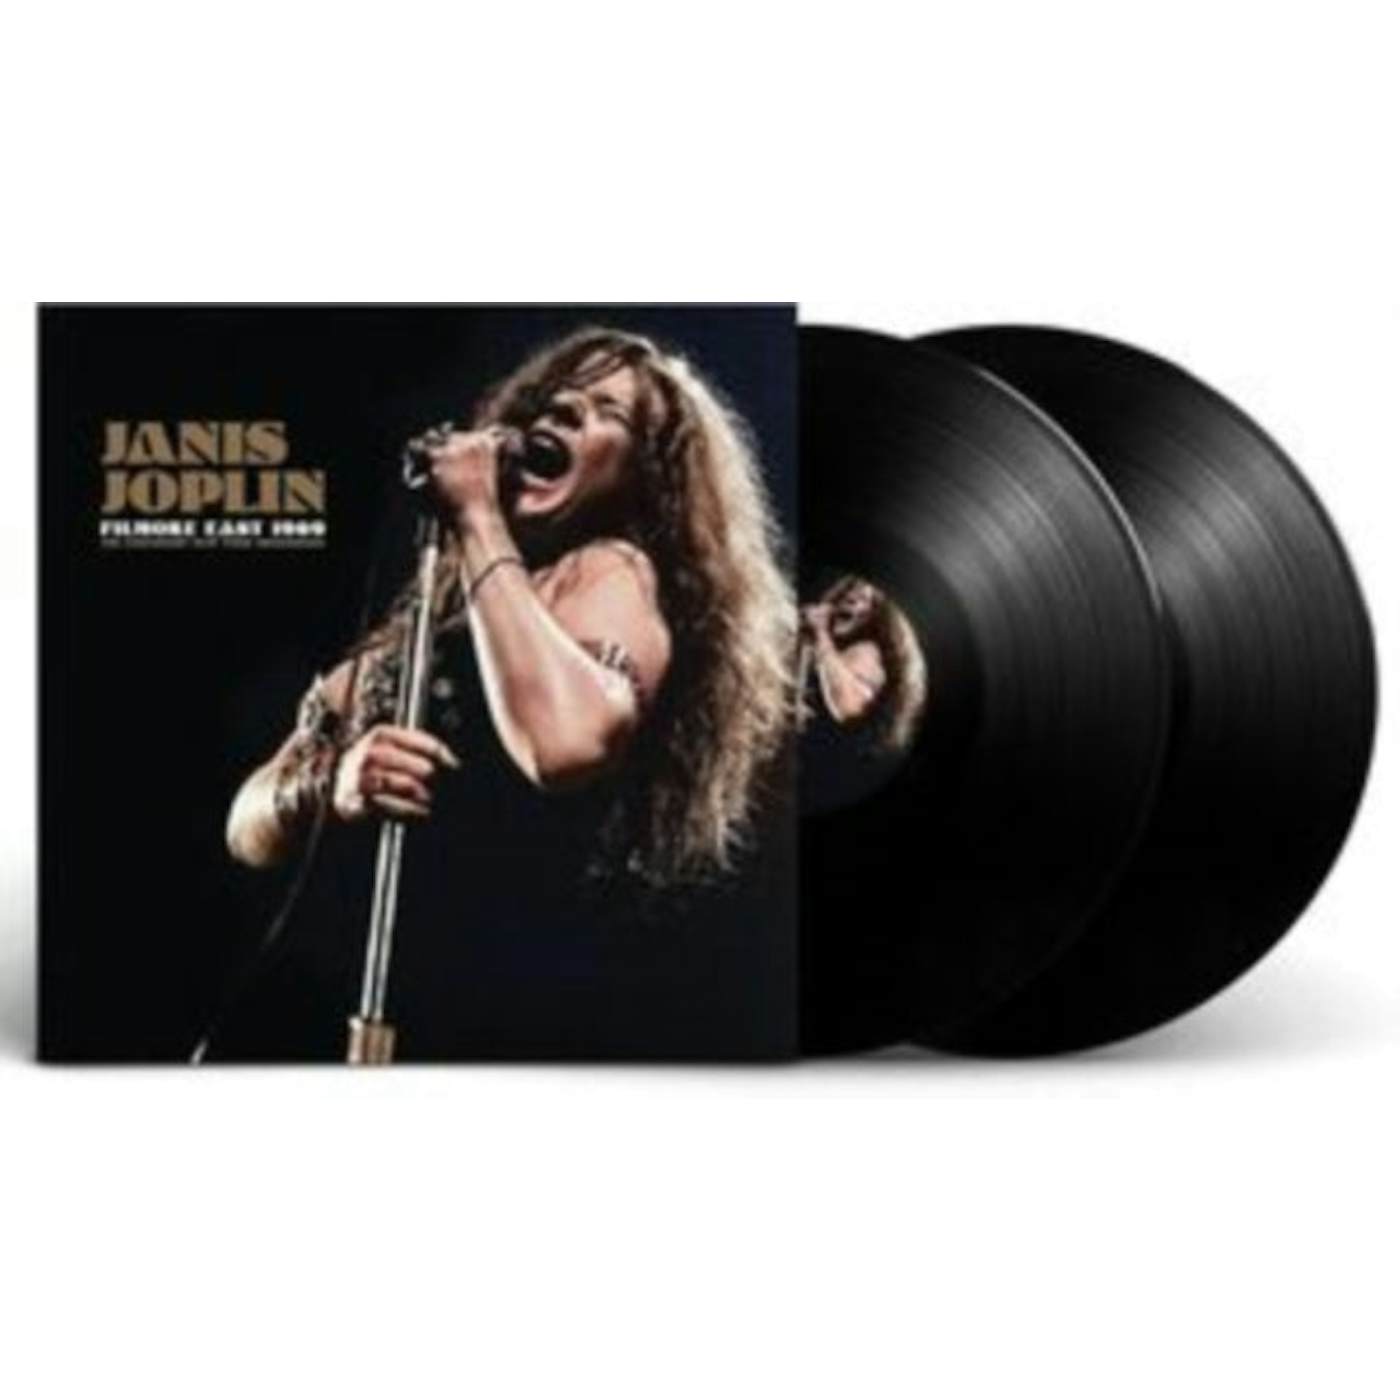 Janis Joplin LP - Fillmore East 1969 (Vinyl)